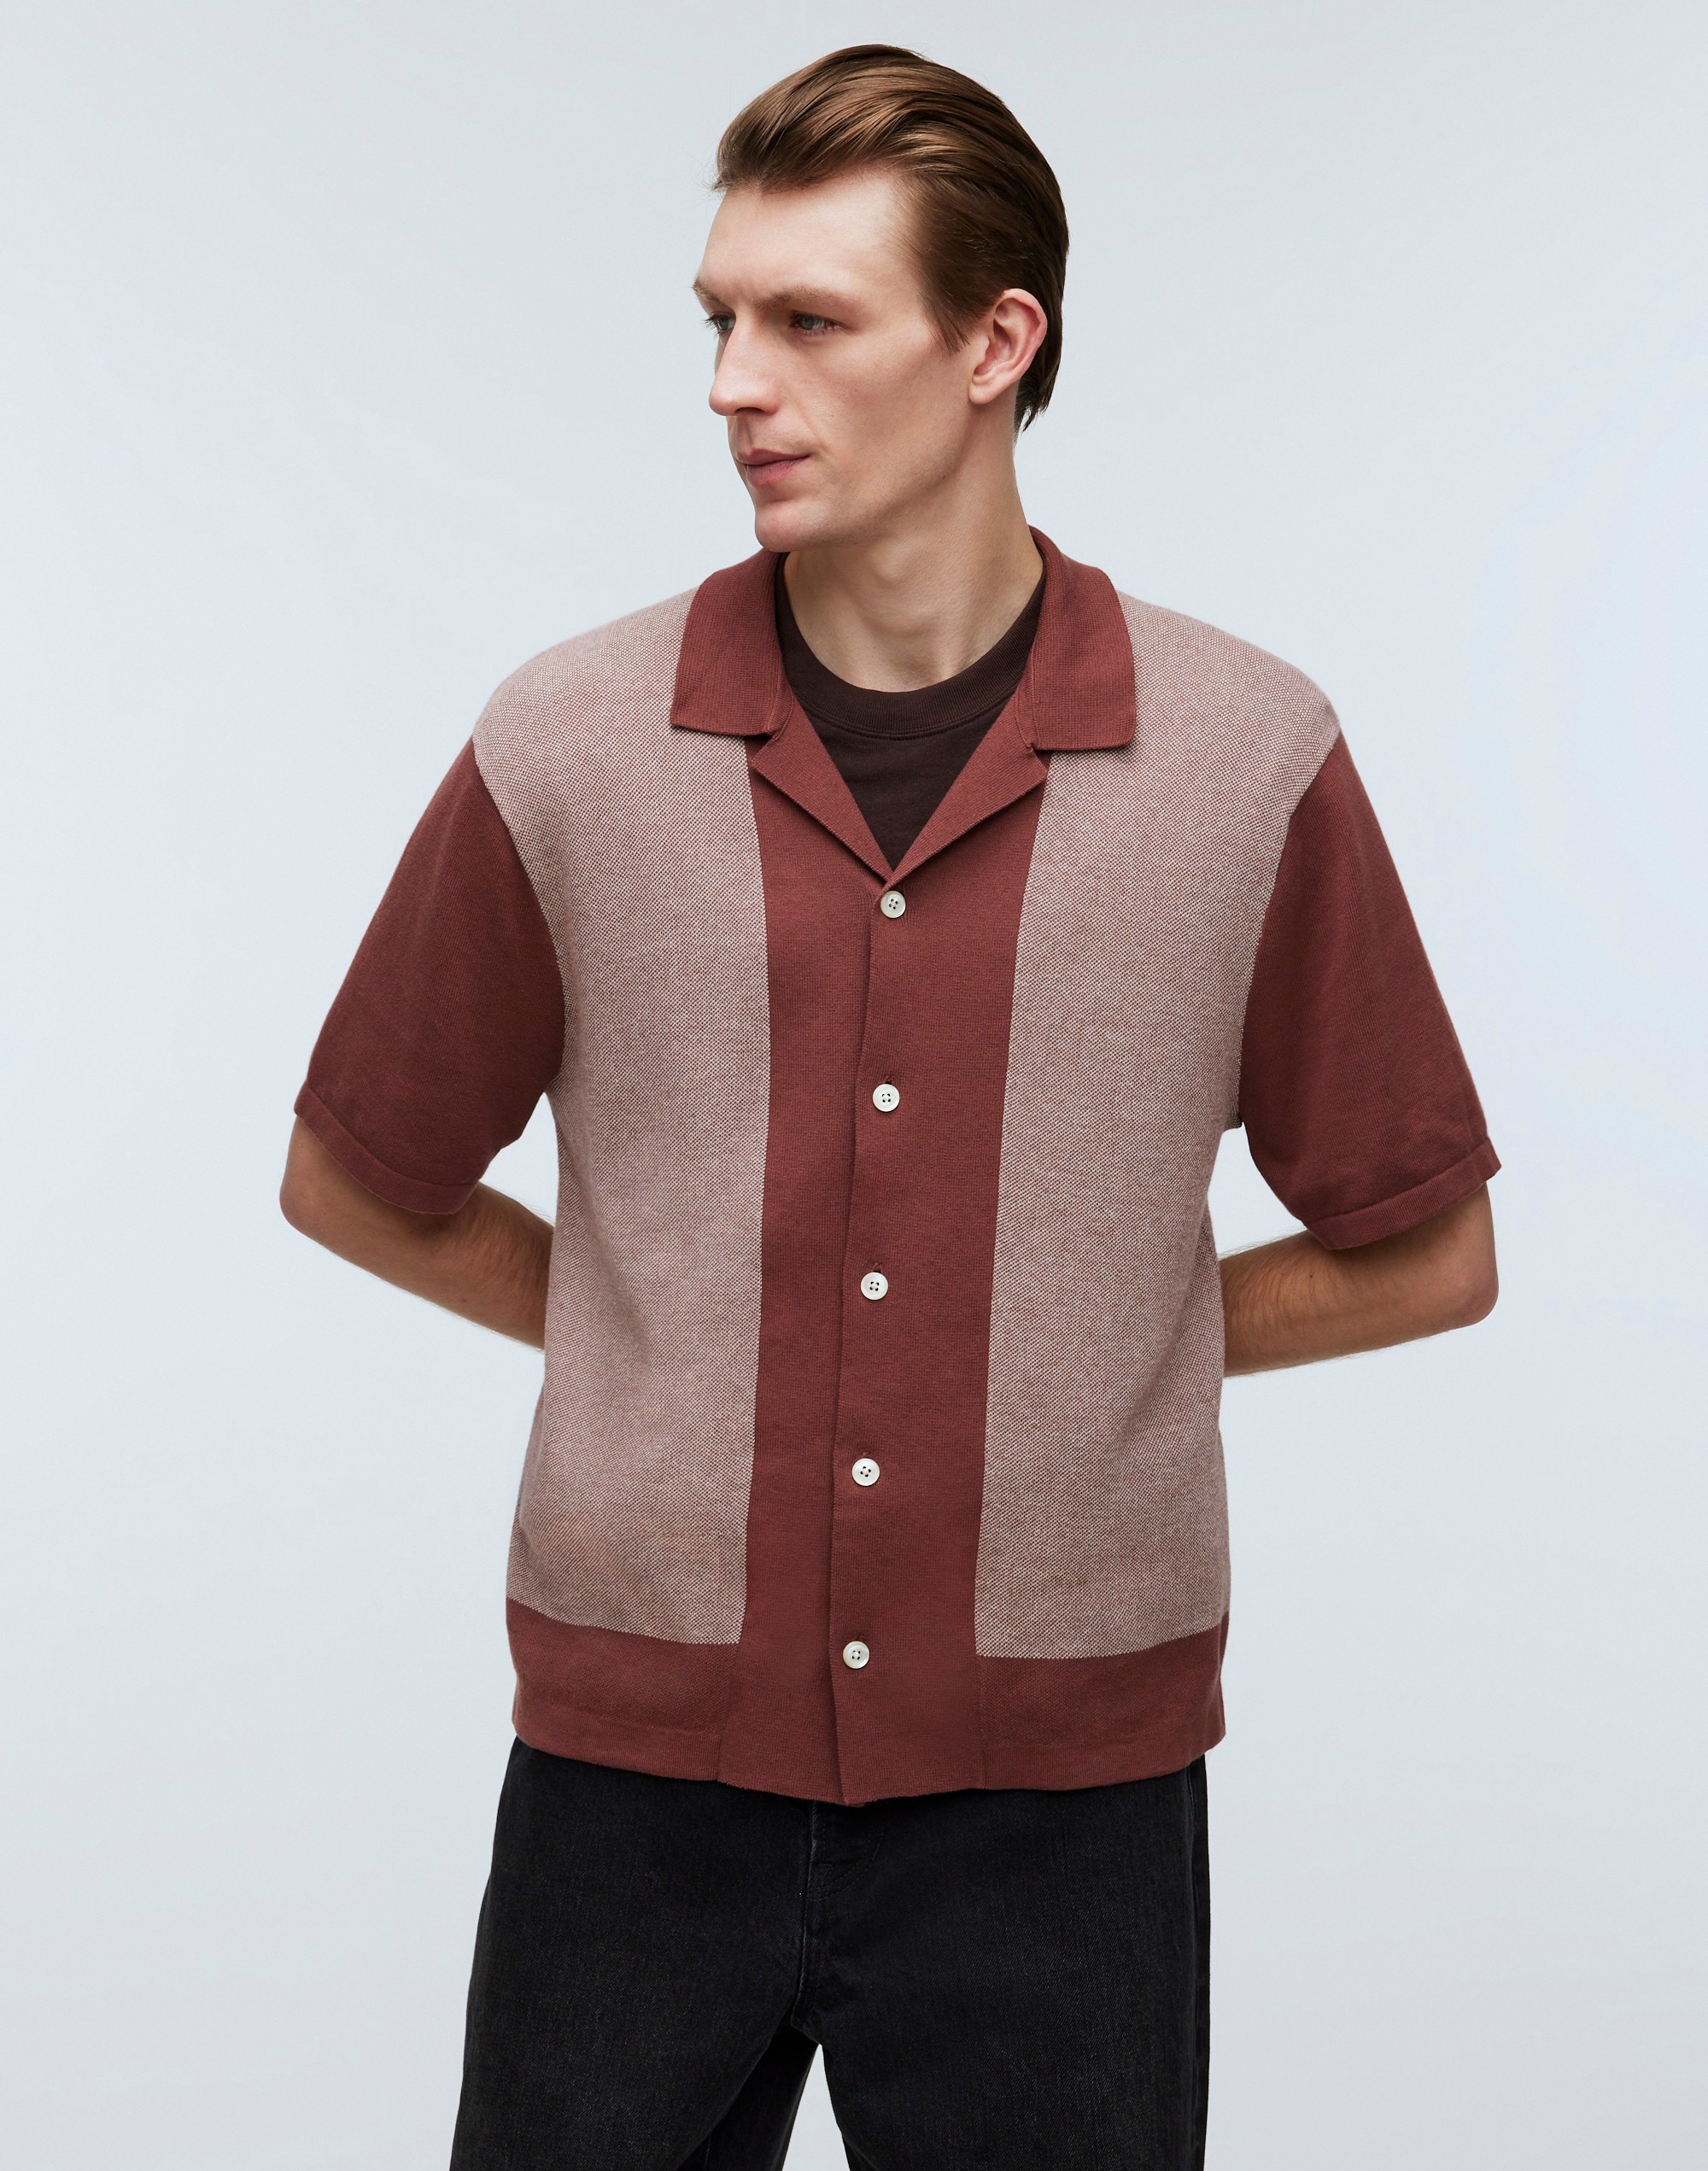 Colorblock Sweater Polo Shirt